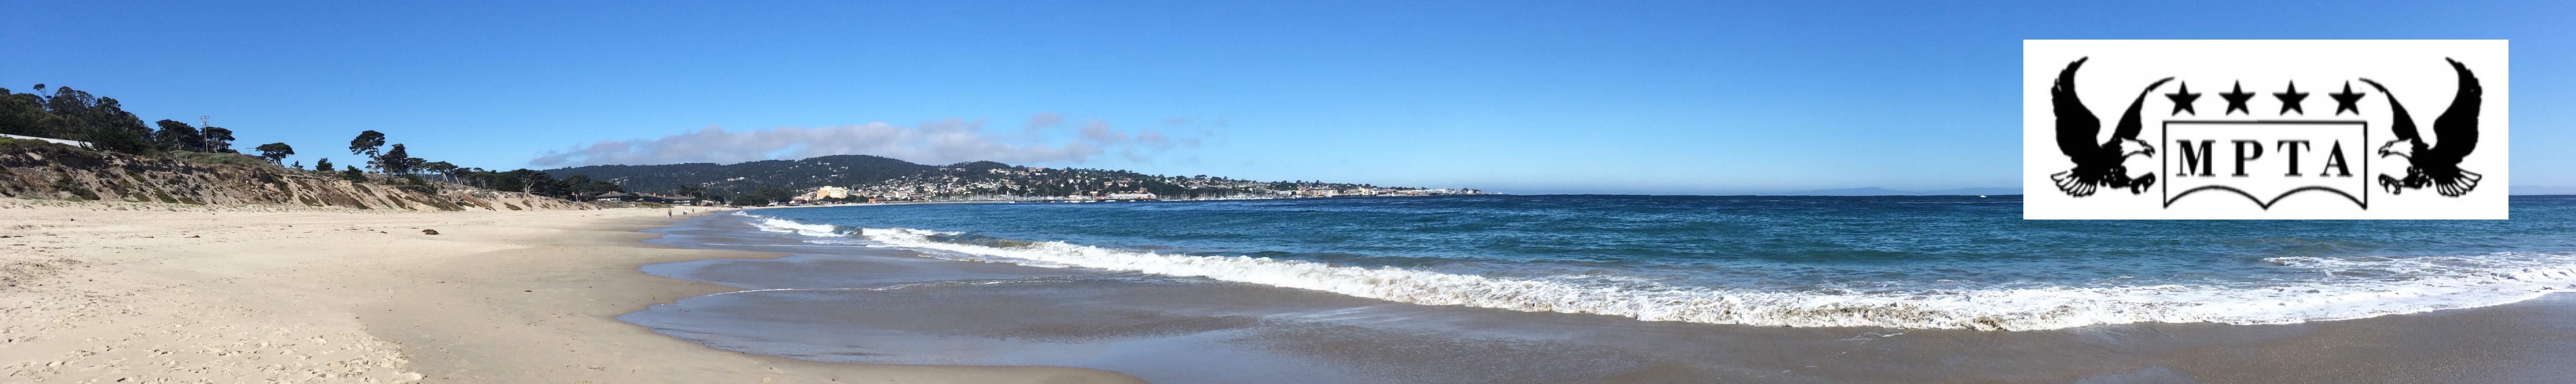 Monterey Peninsula Taxpayers Association No Longer Has Presence on Monterey Peninsula Regional Park District Oversight Committee